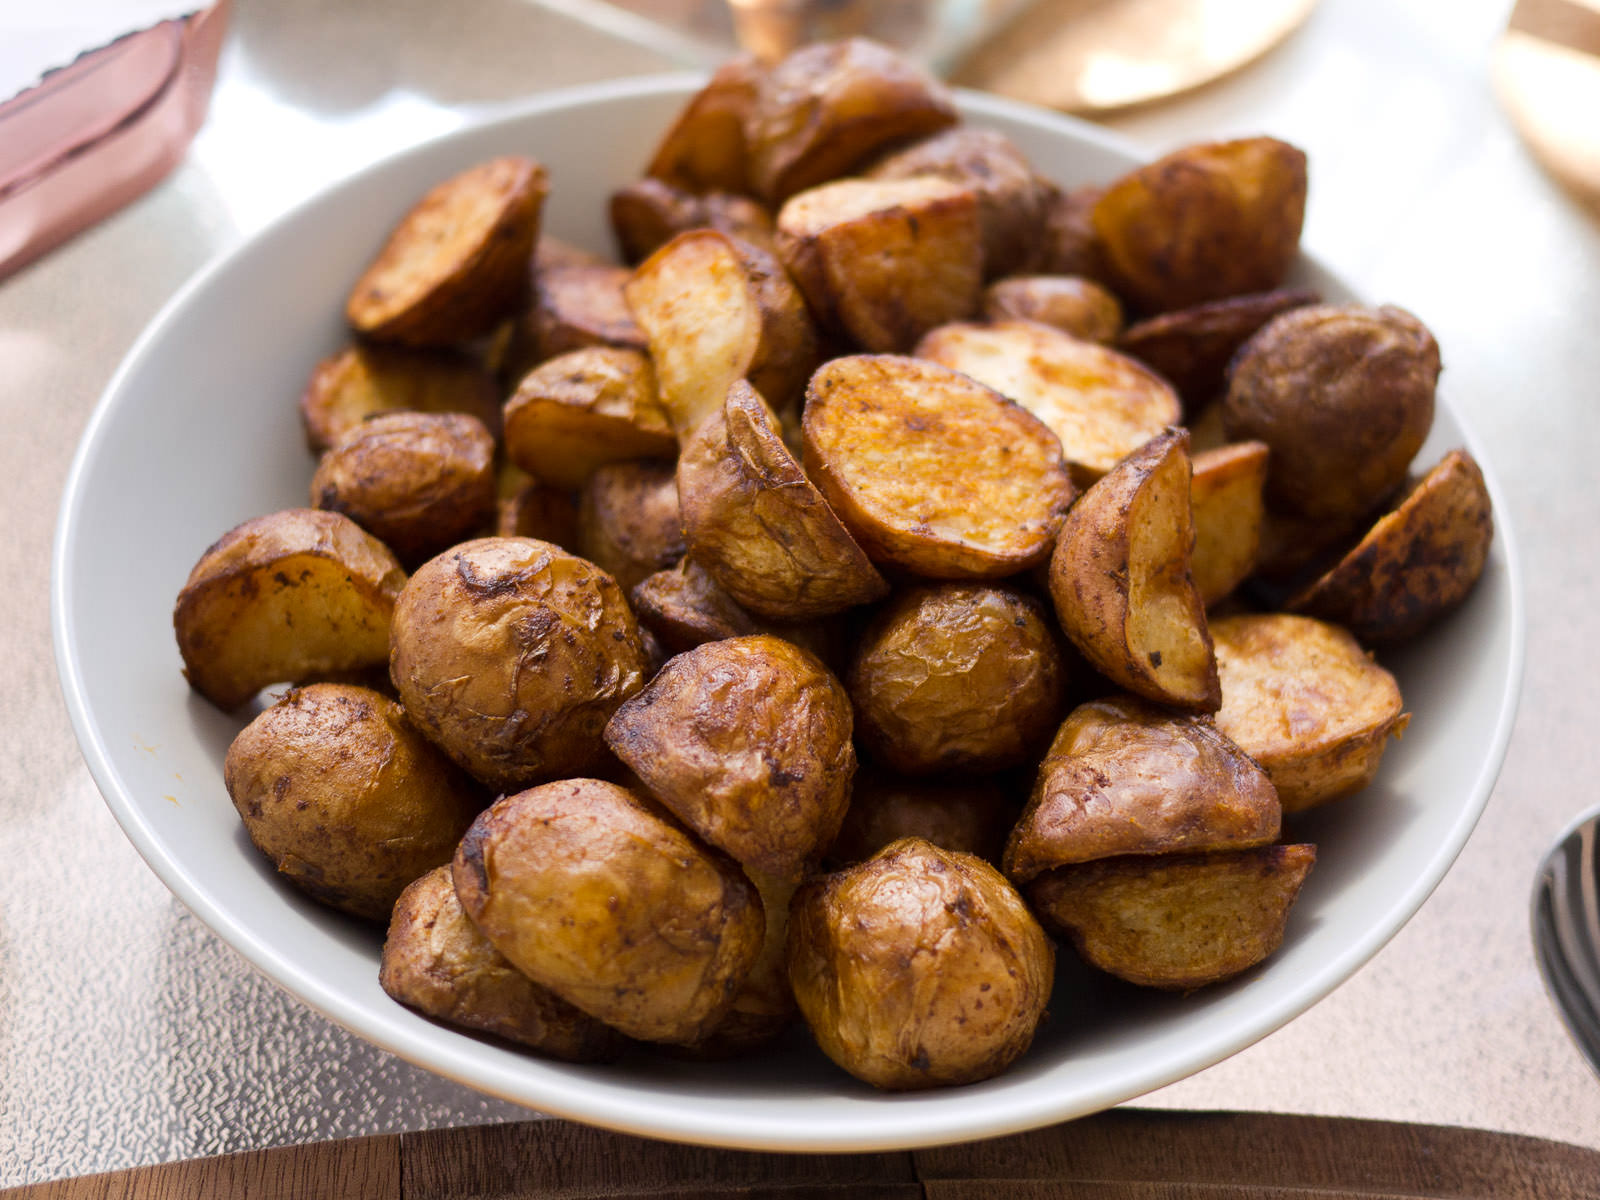 Roasted homegrown potatoes